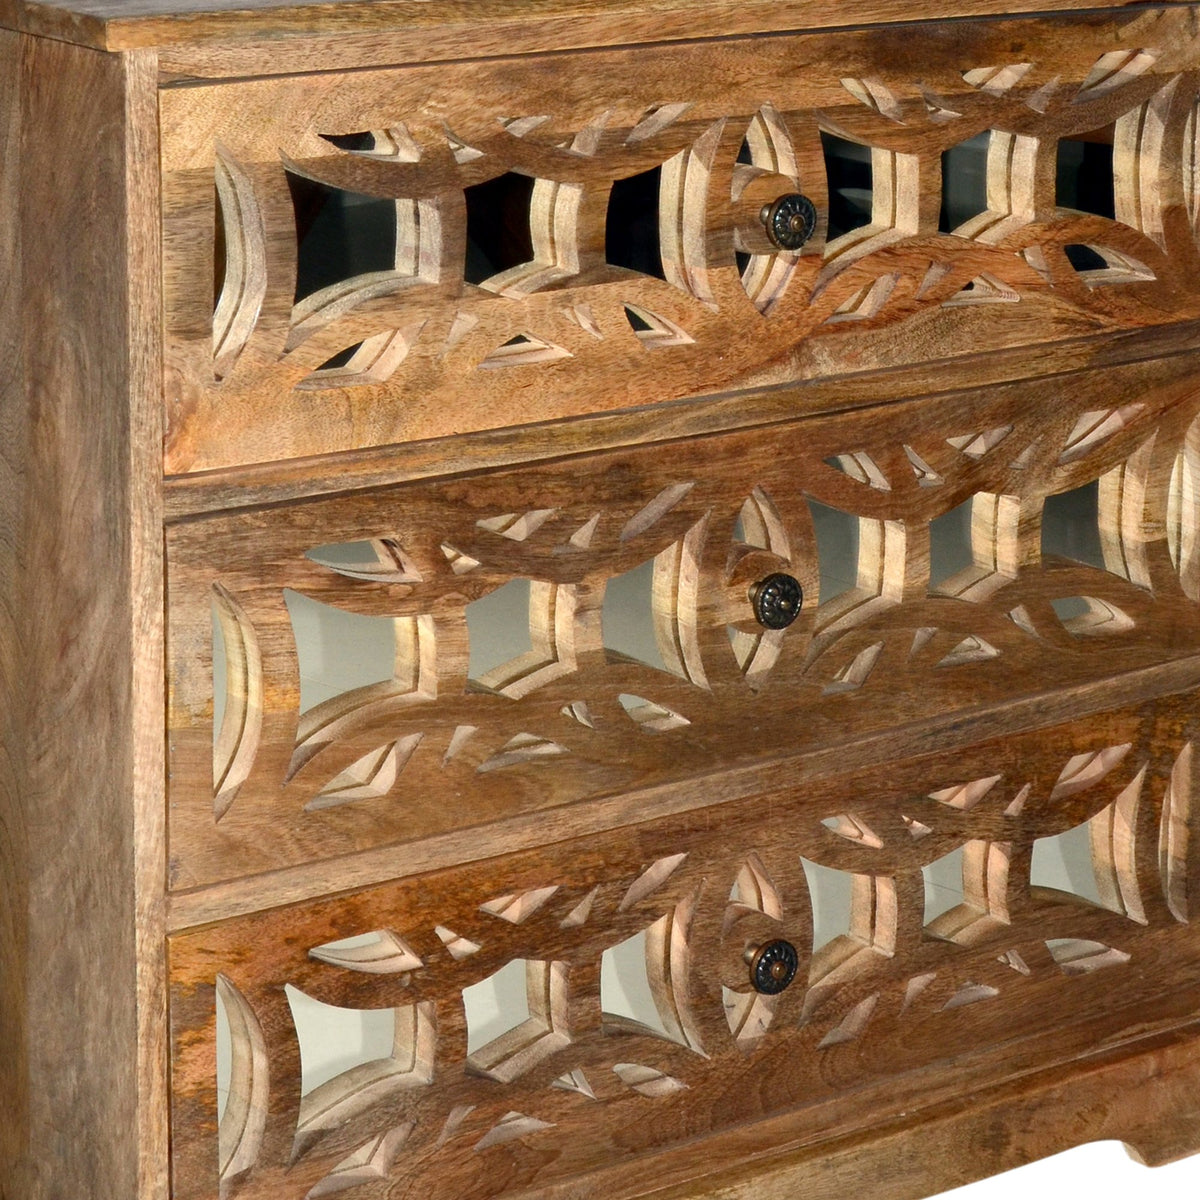 3 Drawer Mango Wood Console Storage Cabinet with Lattice Design Mirror Front, Brown - UPT-213131